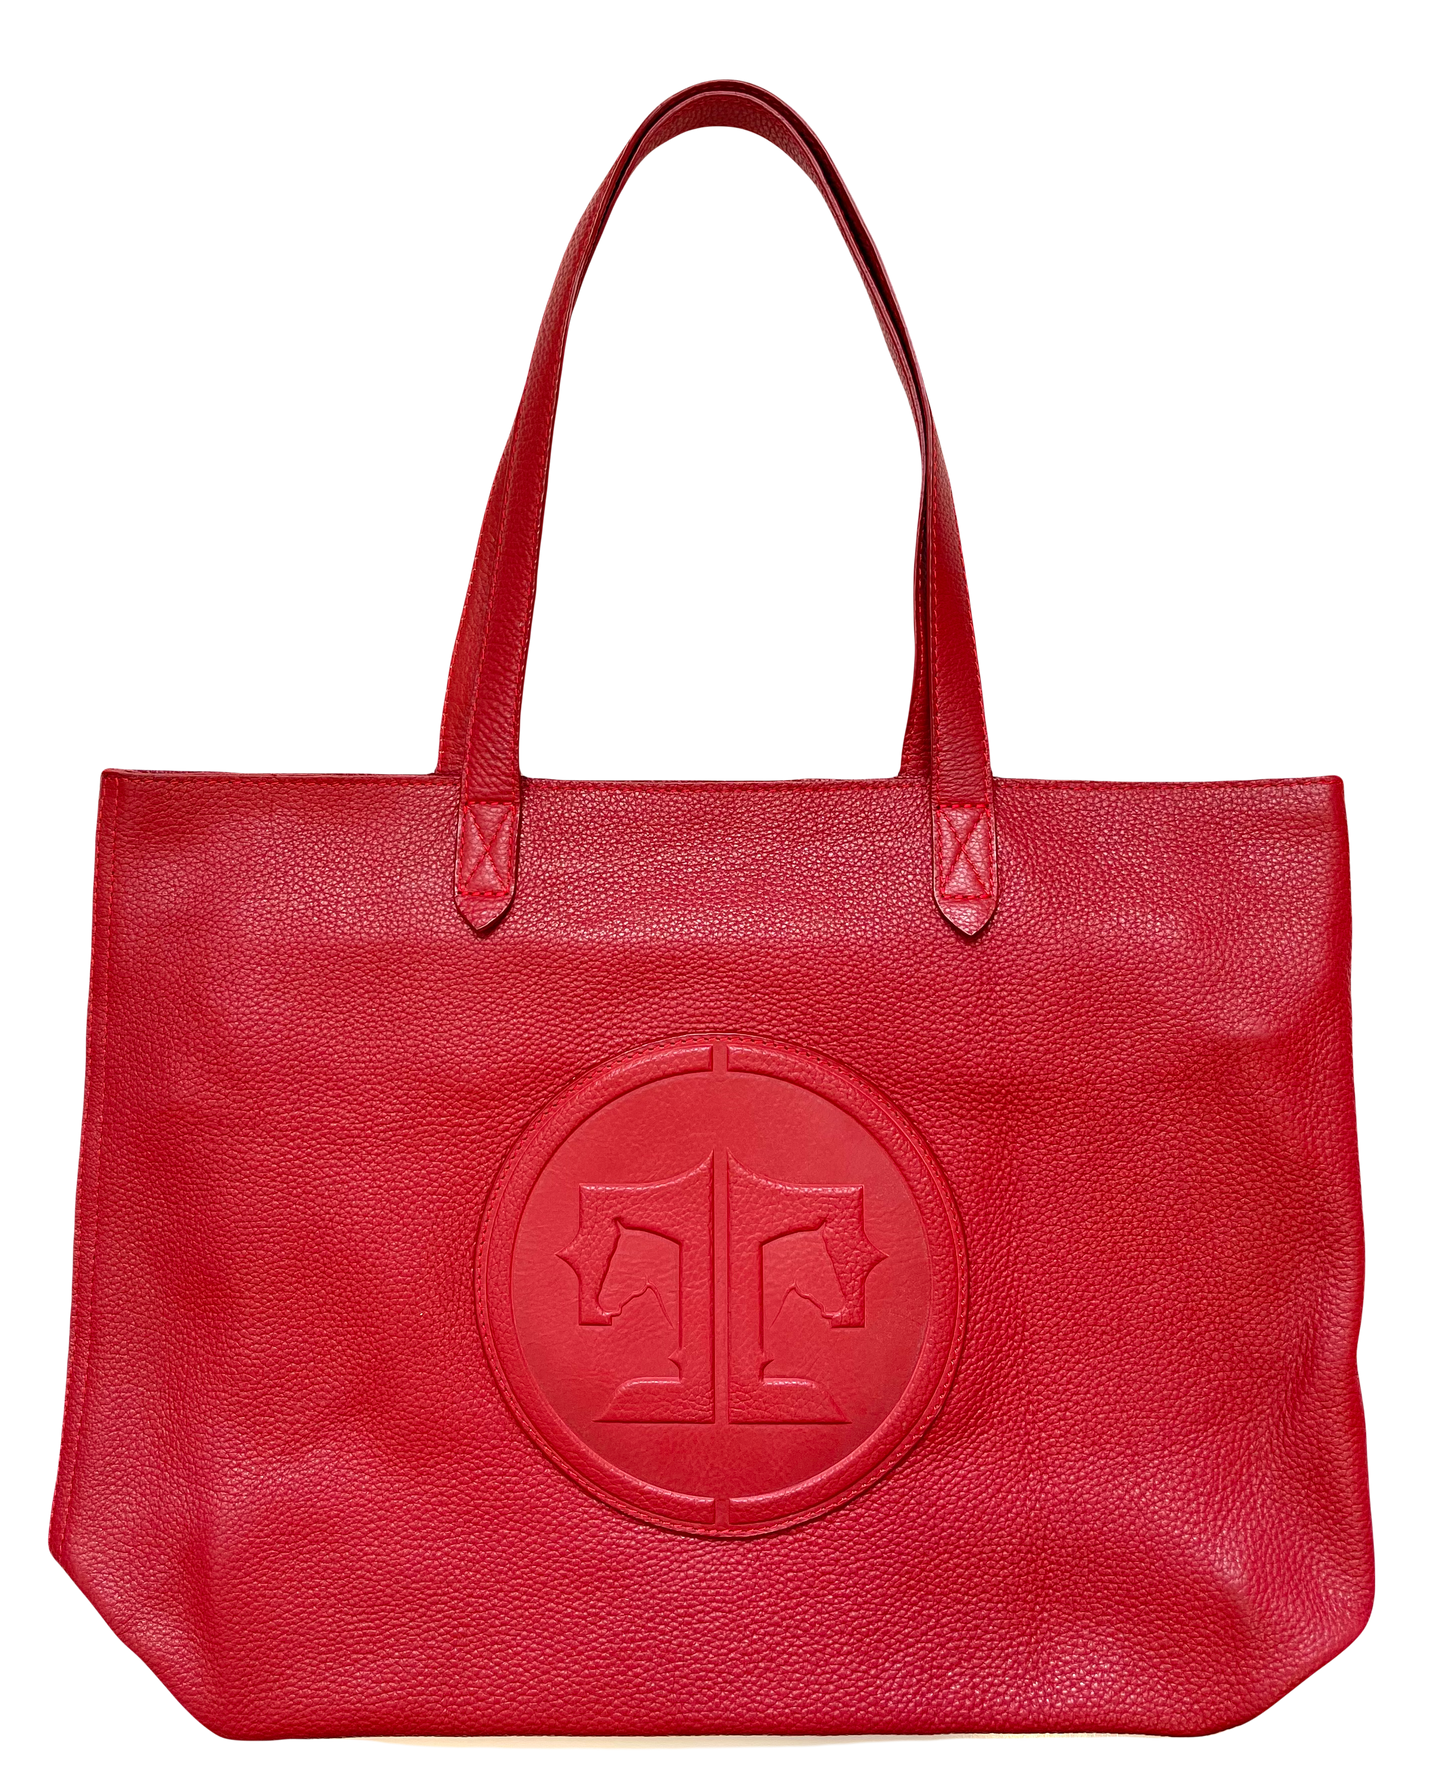 Tucker Tweed Equestrian Leather Handbags SIgnature Red Sonoma Shoulder Bag: Signature